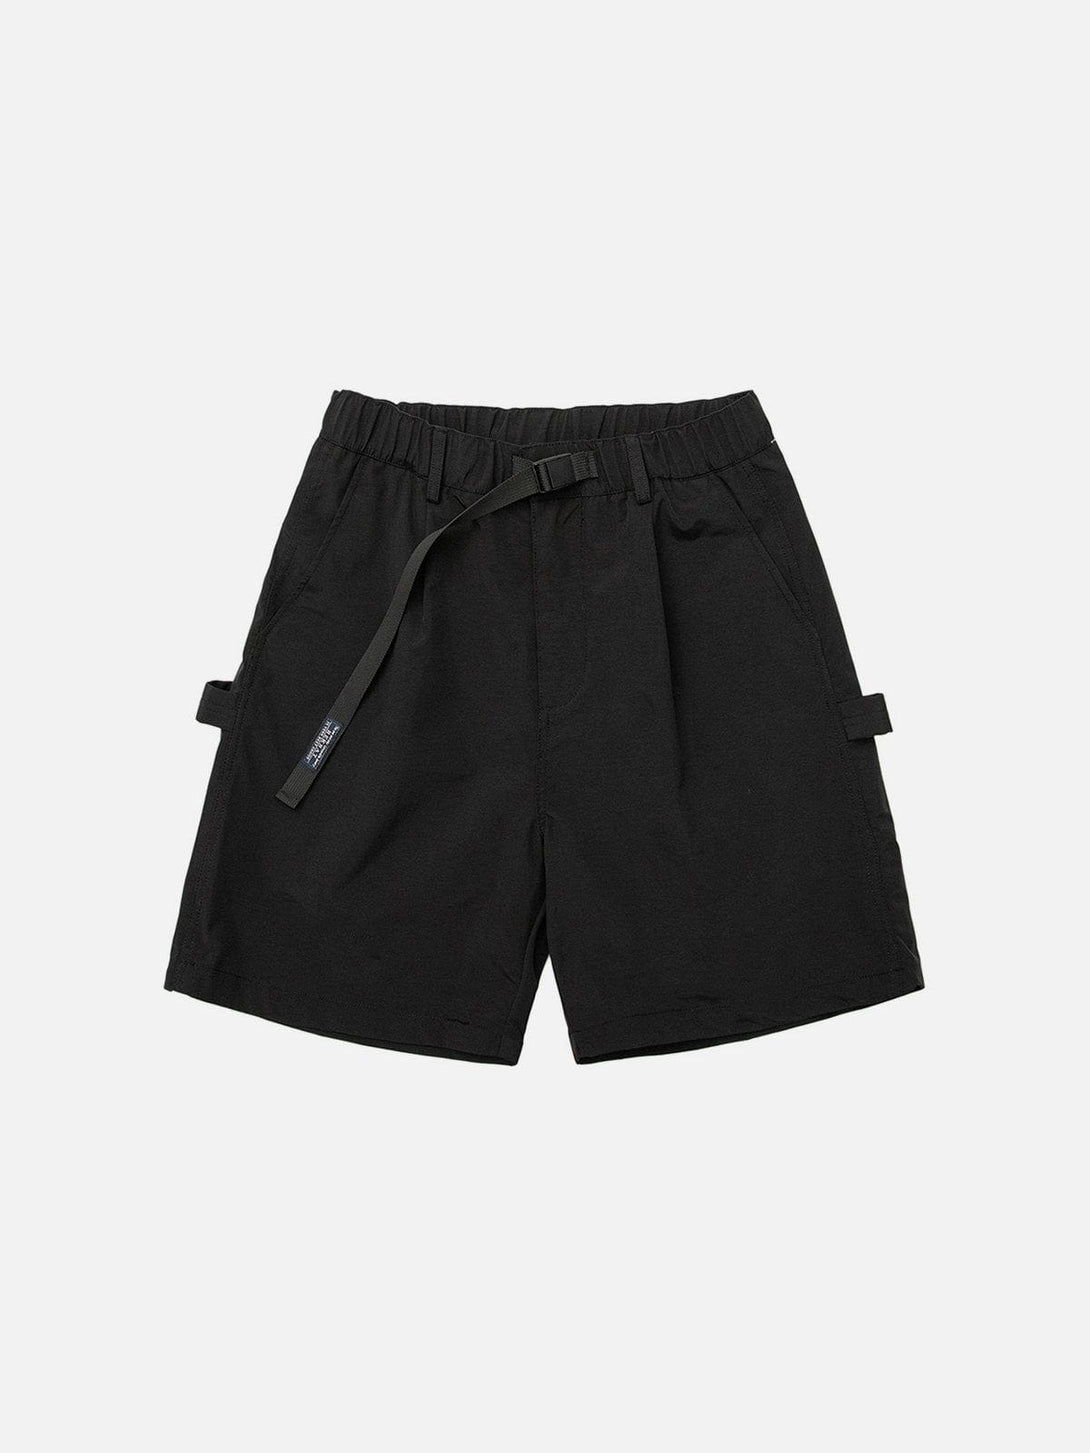 Levefly - Straight Barrel Shorts - Streetwear Fashion - levefly.com